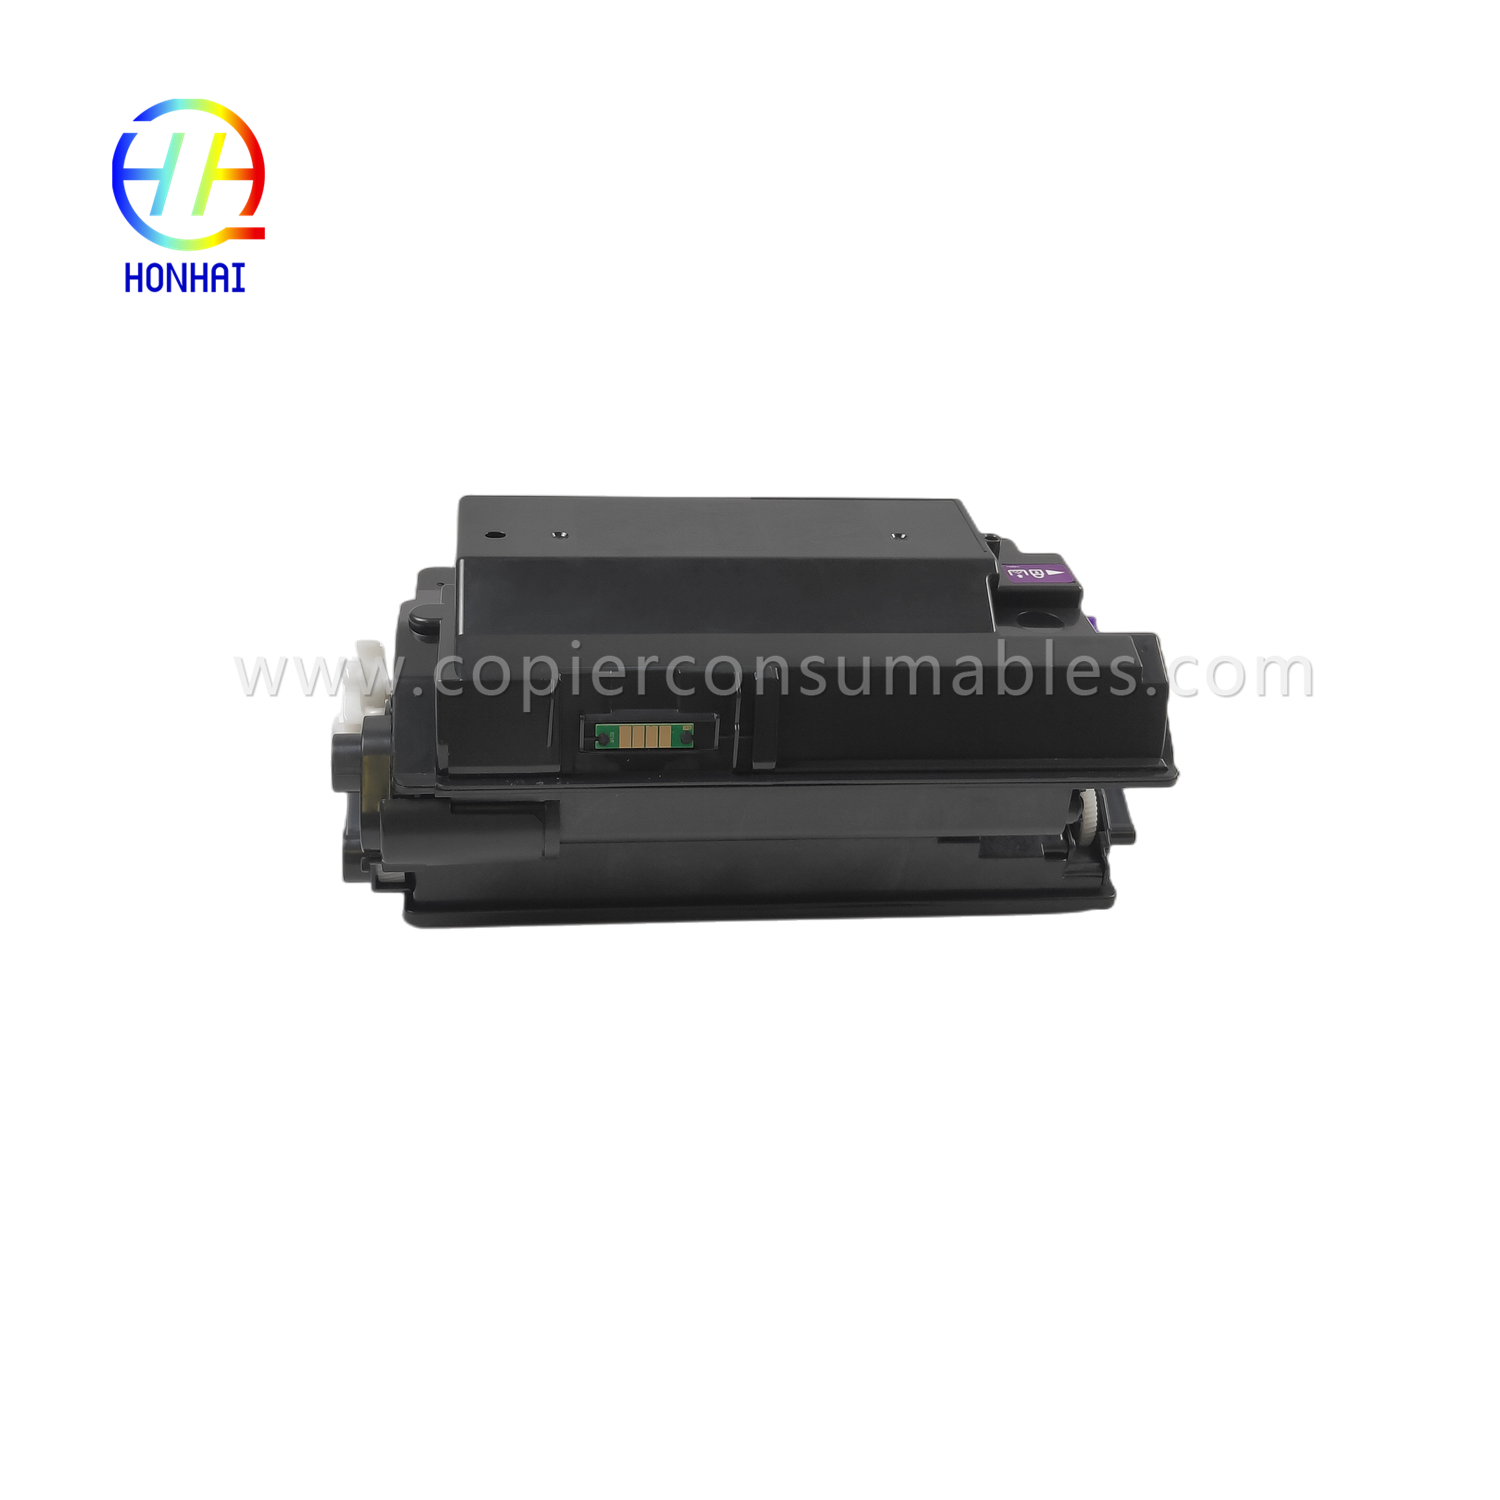 https://www.copierconsumables.com/toner-cartridge-black-for-ricoh-418127-im430-im430f-im430fb-product/